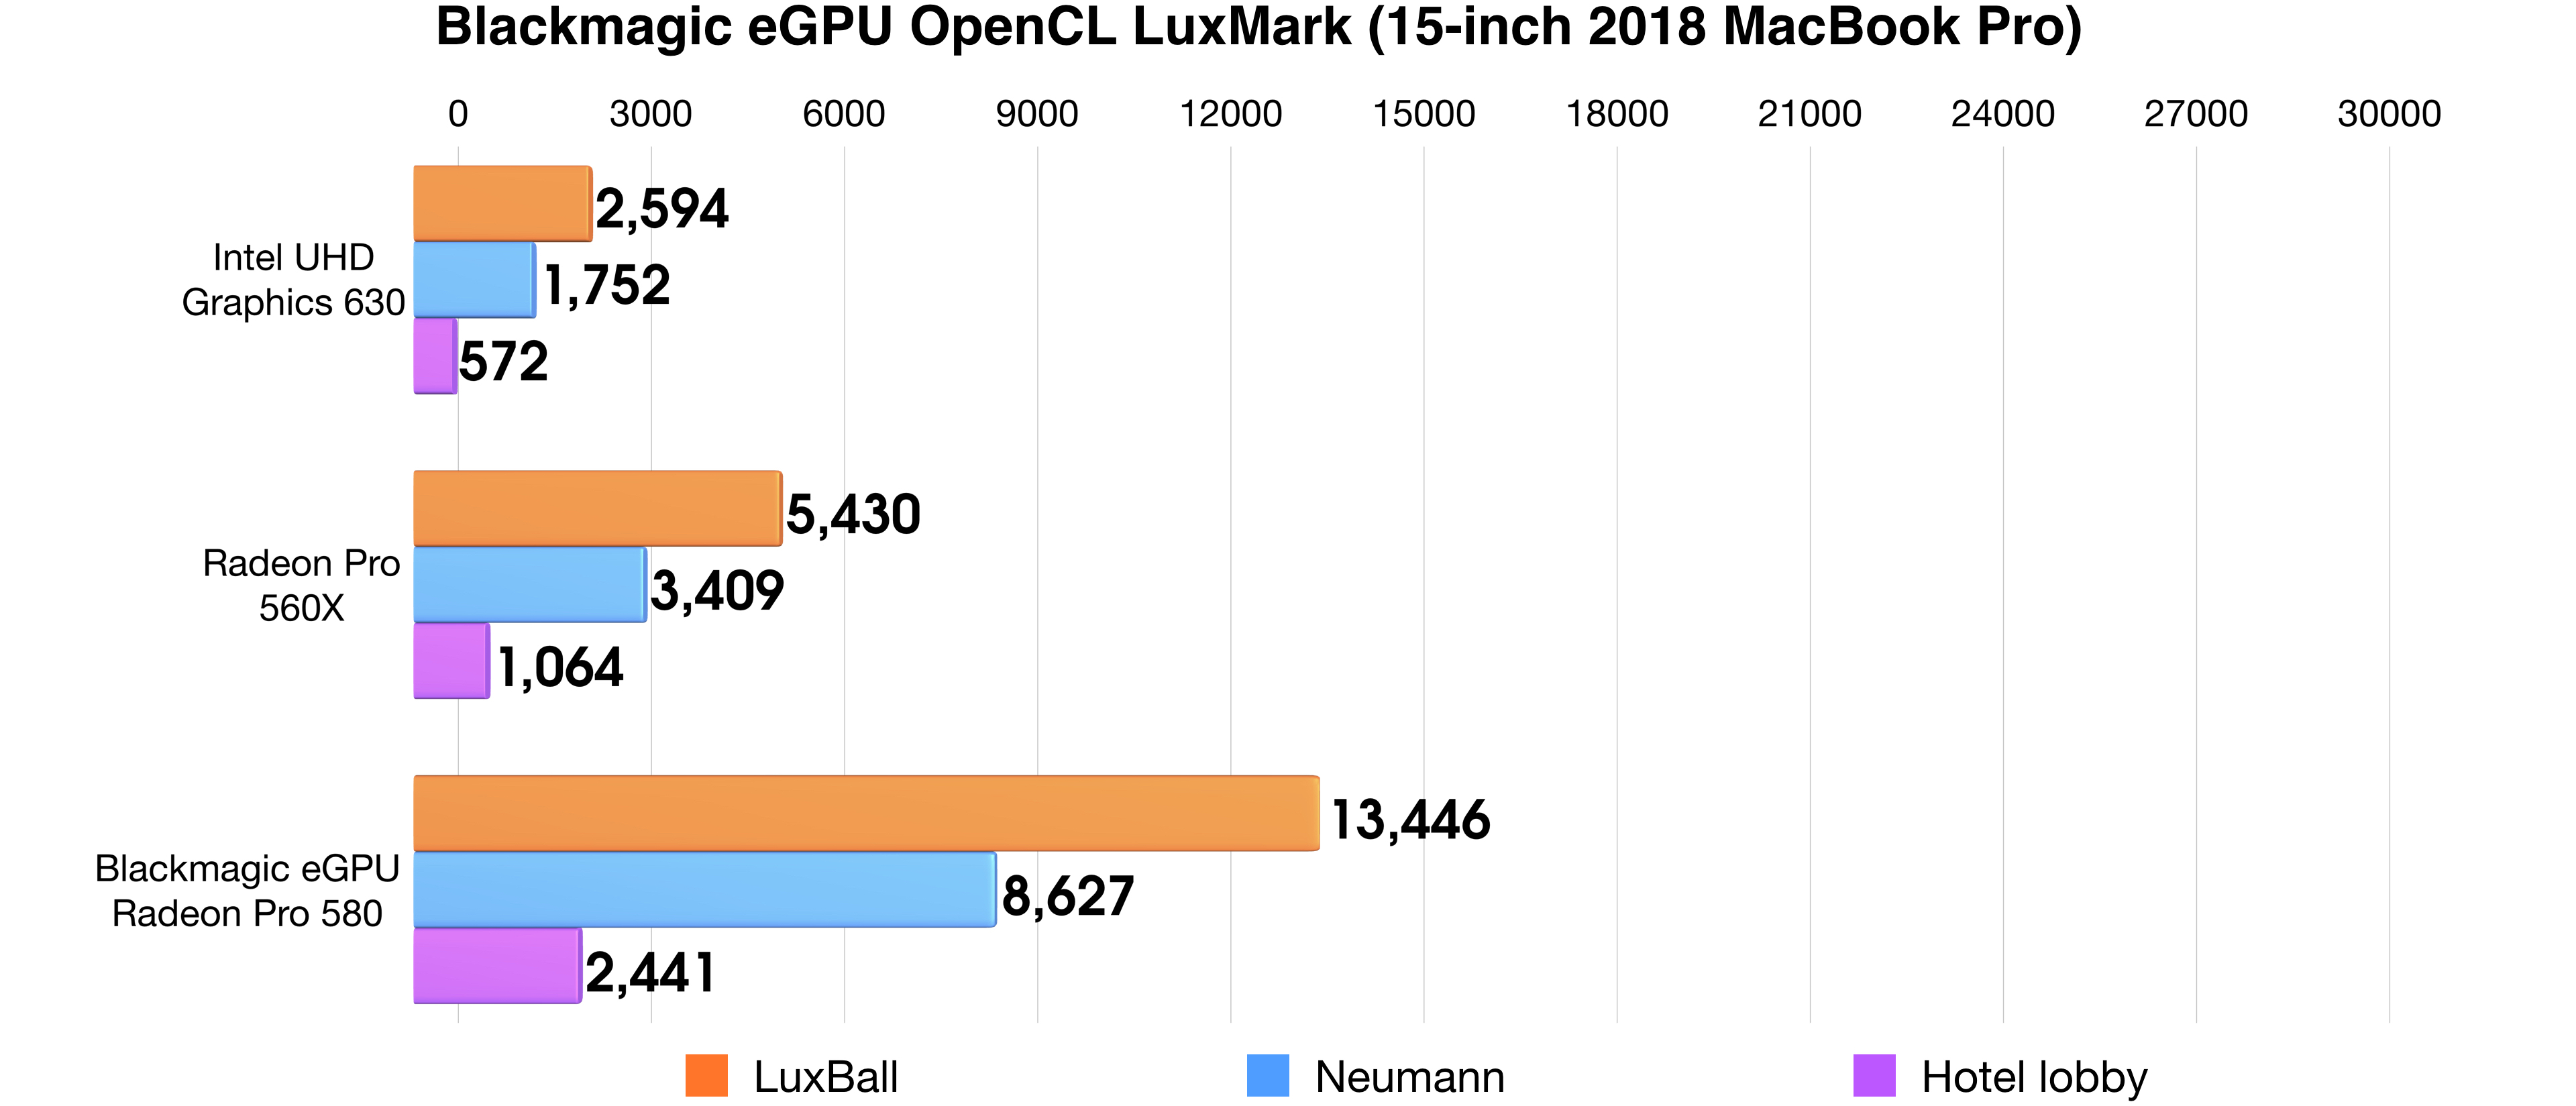 opencl benchmark mac